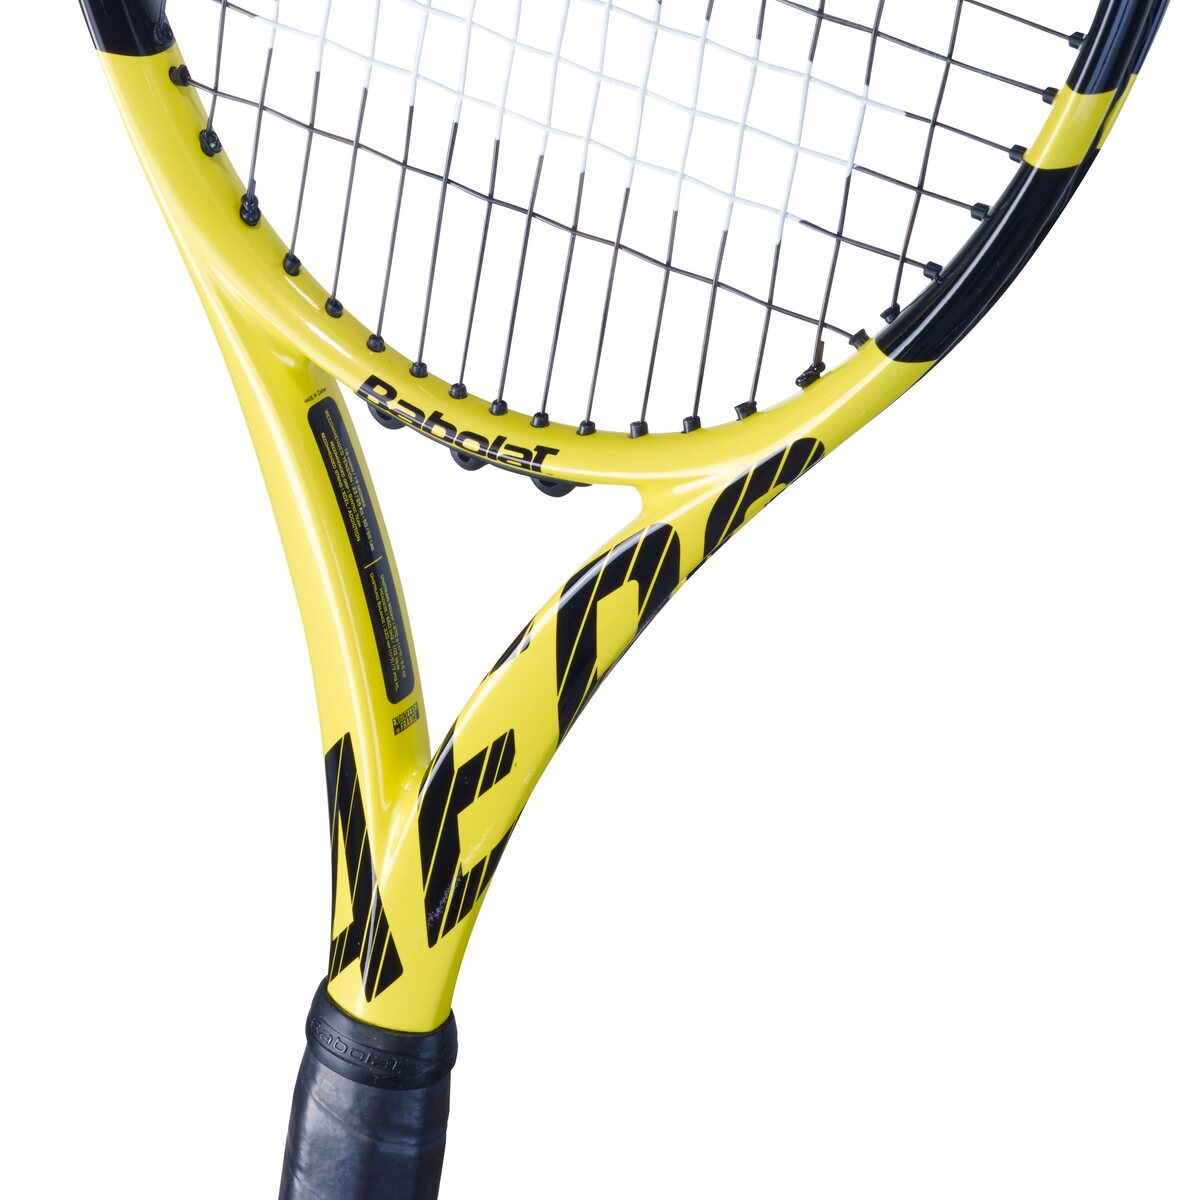 Babolat Aero G S Tennisketcher